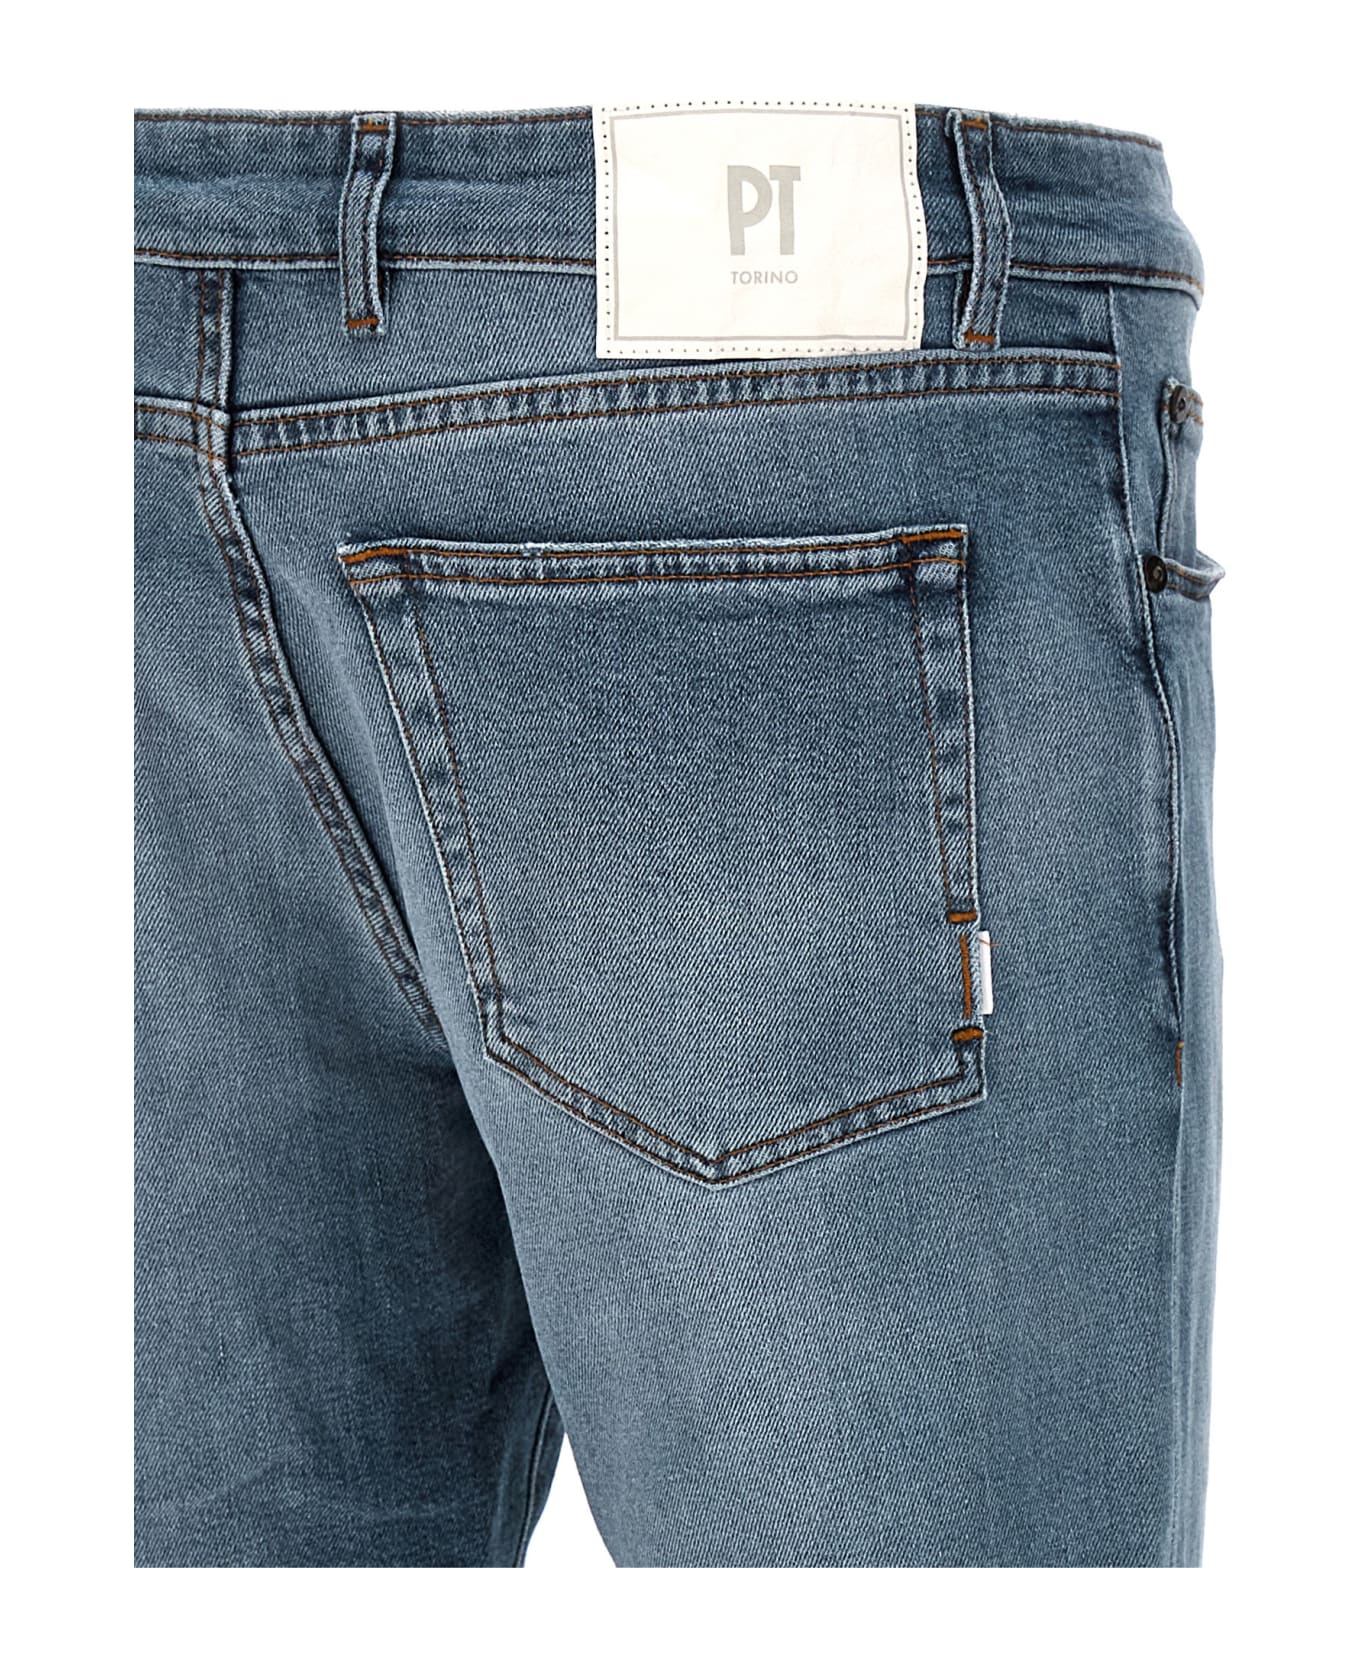 PT Torino 'swing' Jeans デニム